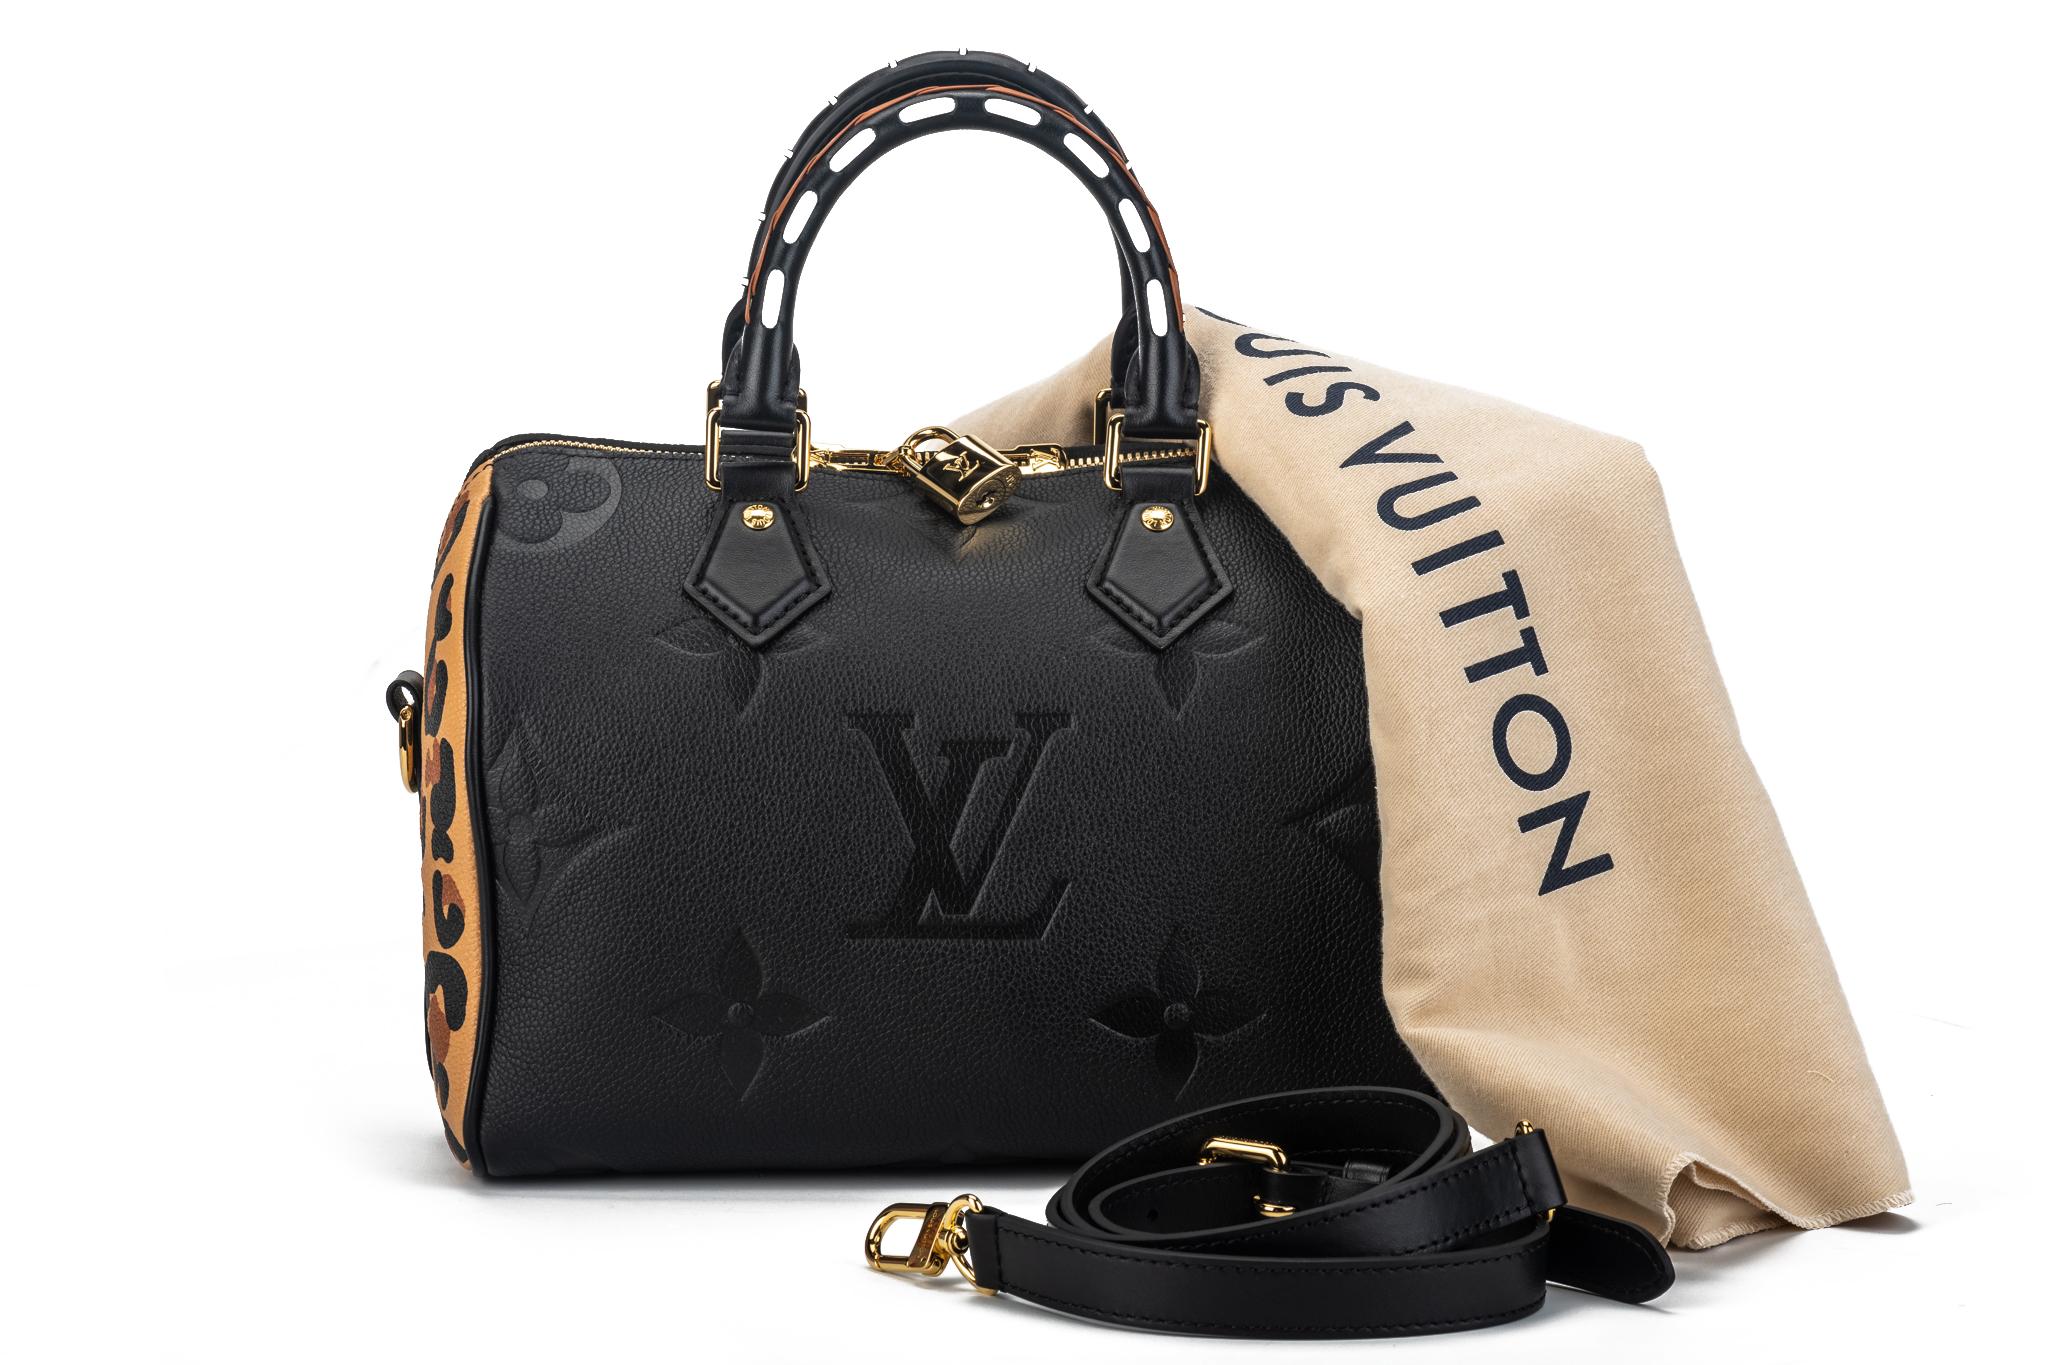 Louis Vuitton Wild At Heart Speedy sac 25 2